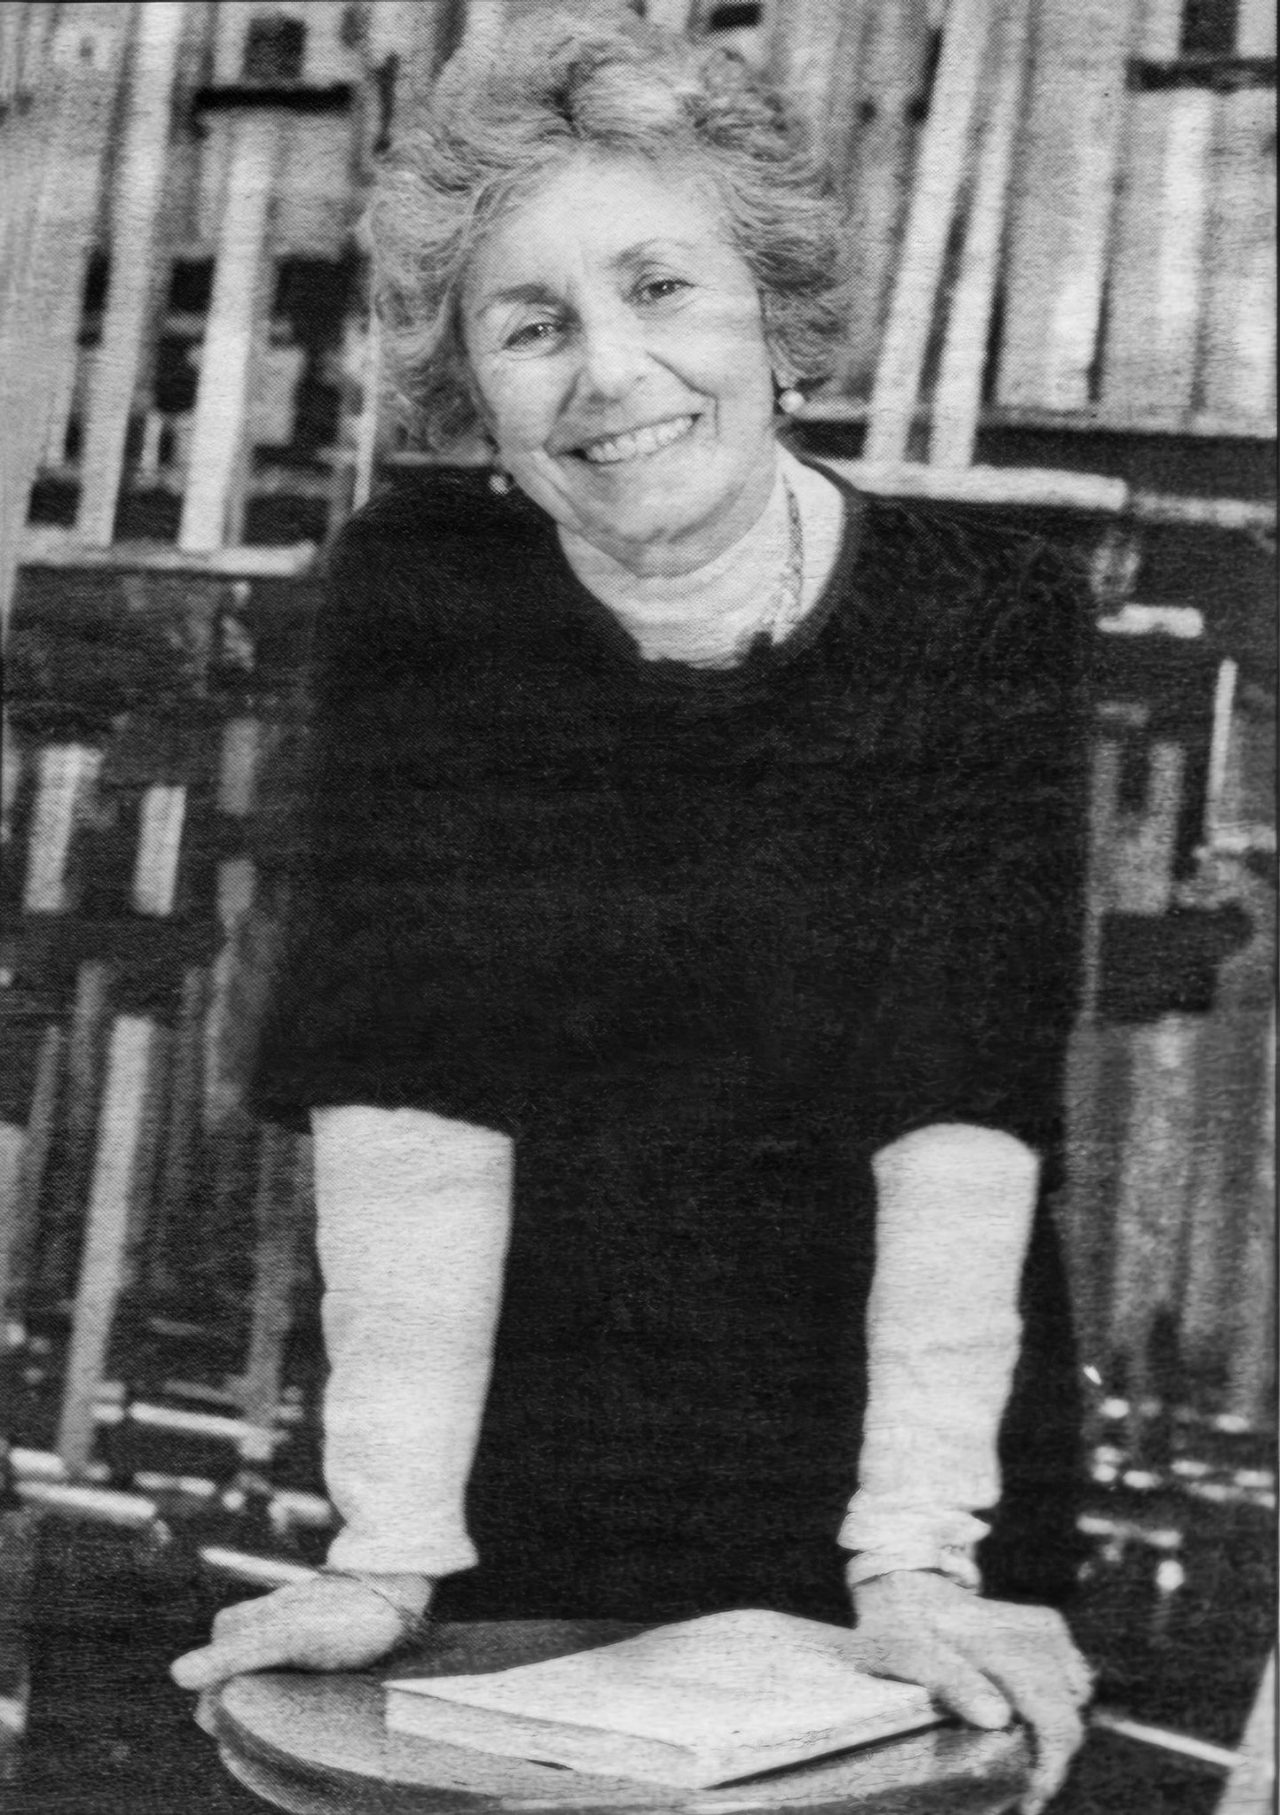 Josephine Von Henneberg, Prof. Emeritus, Art, Art History, and Film Department.
Photo by Lee Pellegrini